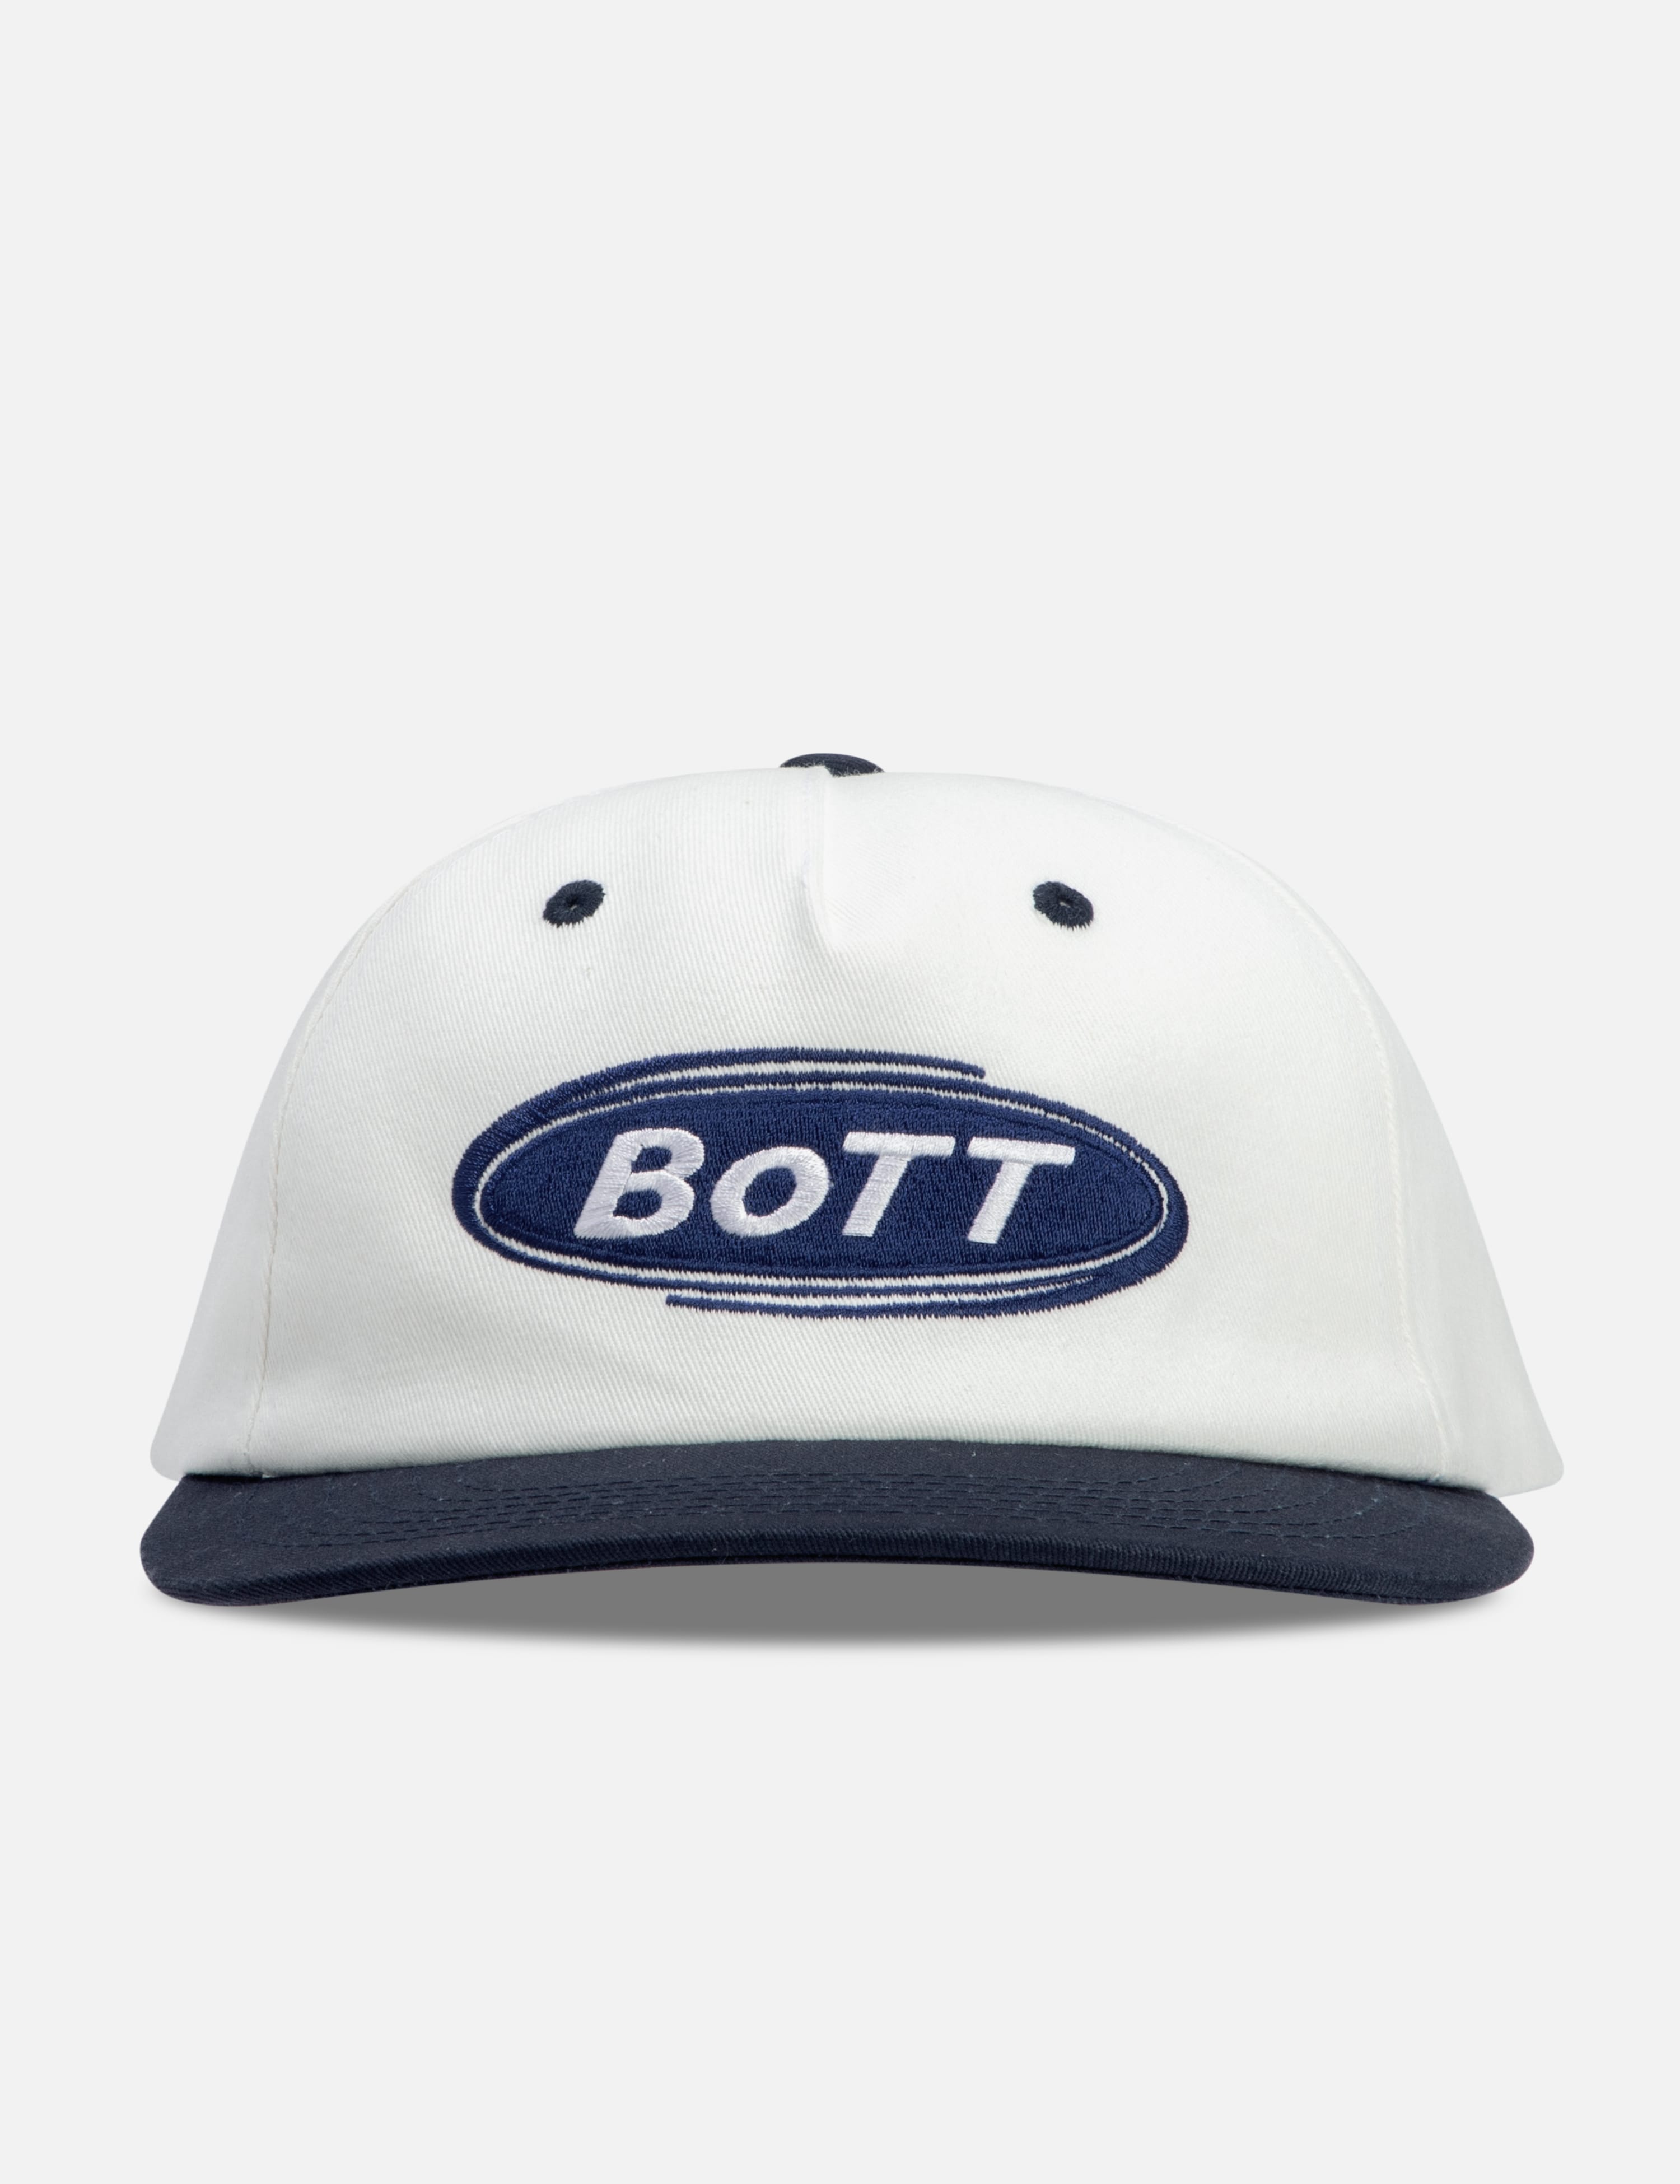 BoTT - Light Logo 5 Panel Cap | HBX - Globally Curated Fashion and